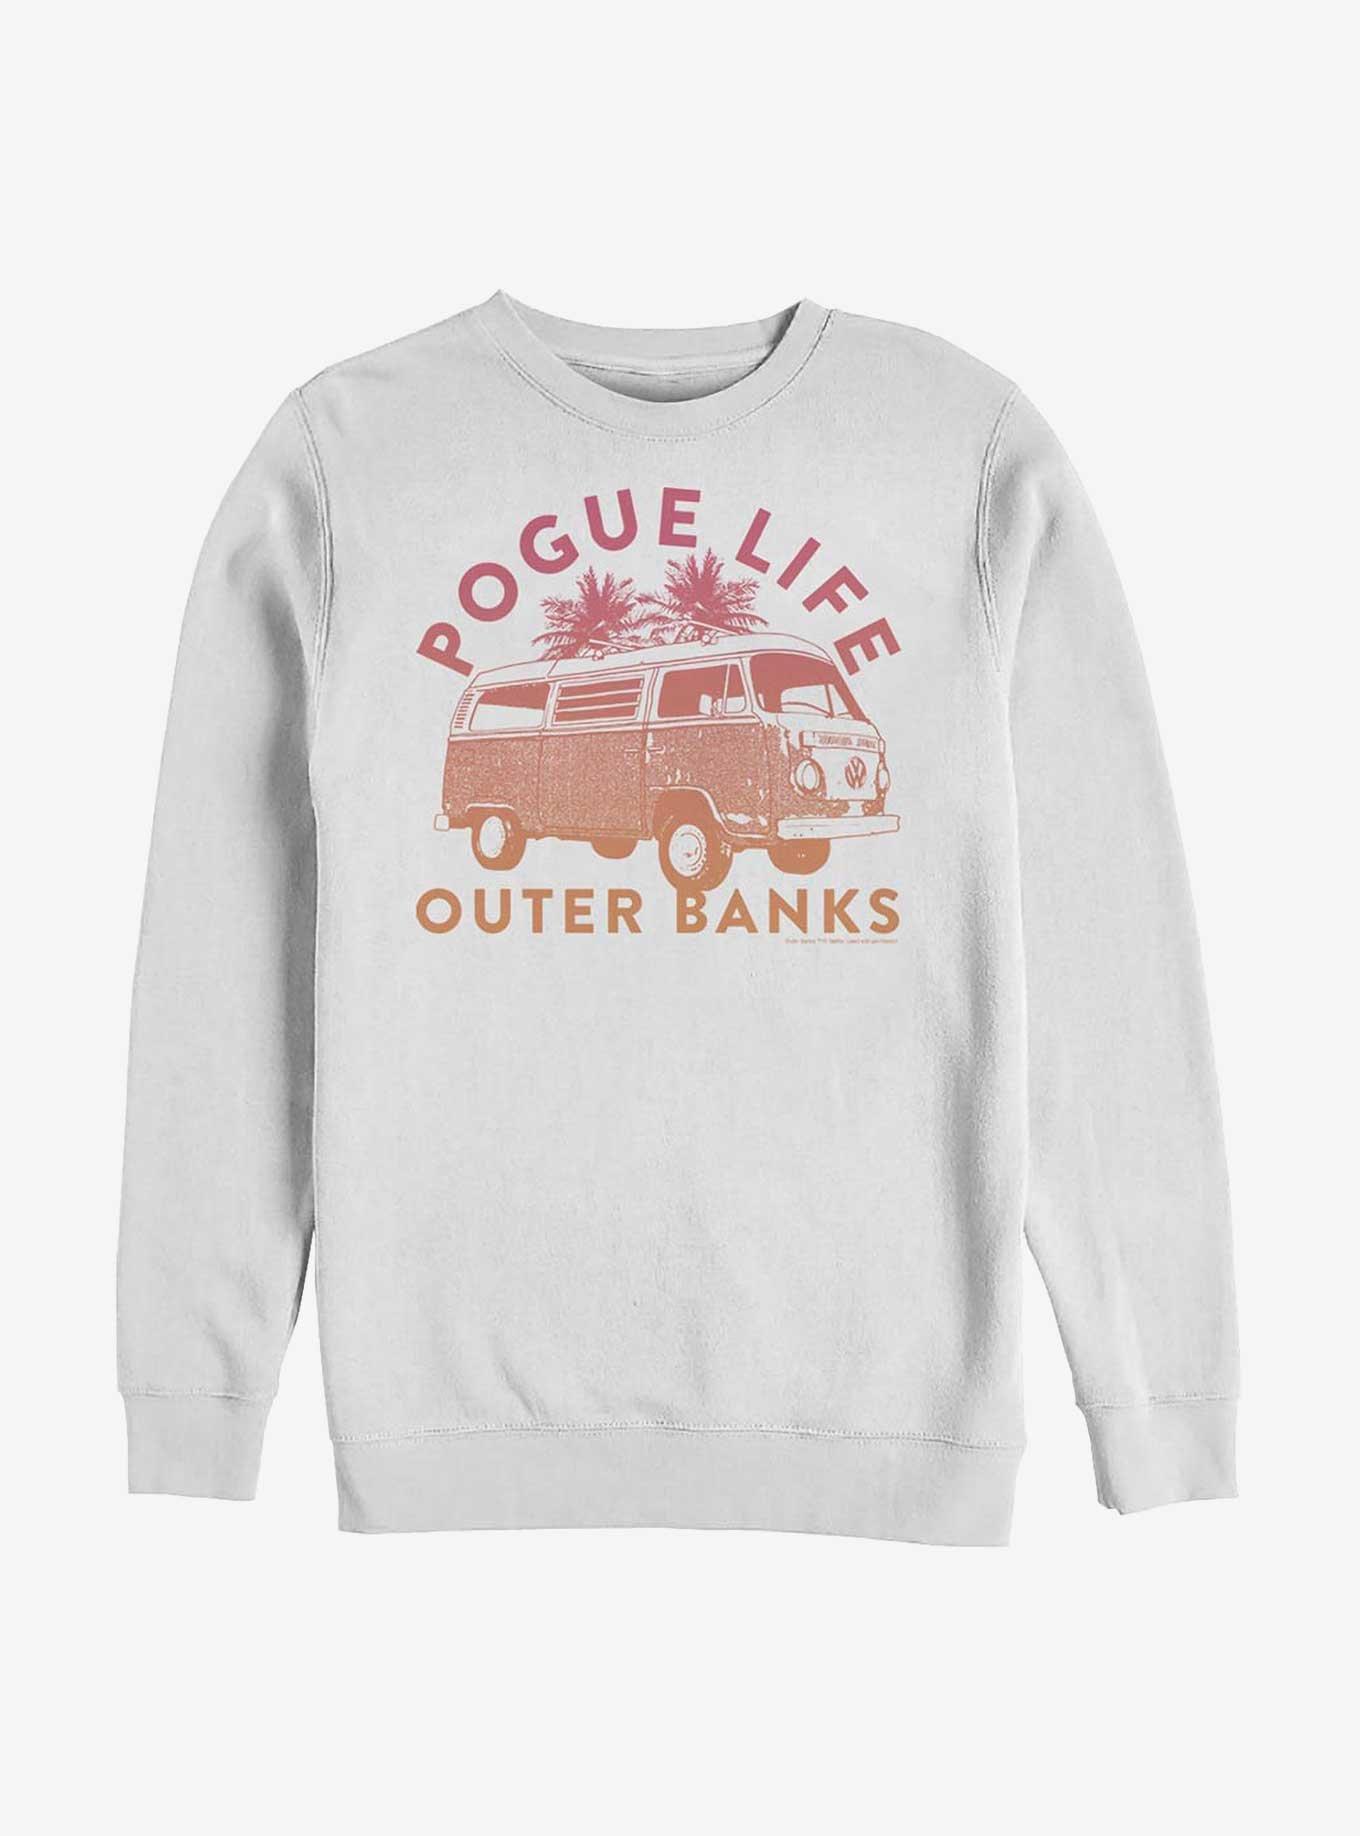 Outer Banks Pogue Life Sweatshirt - WHITE